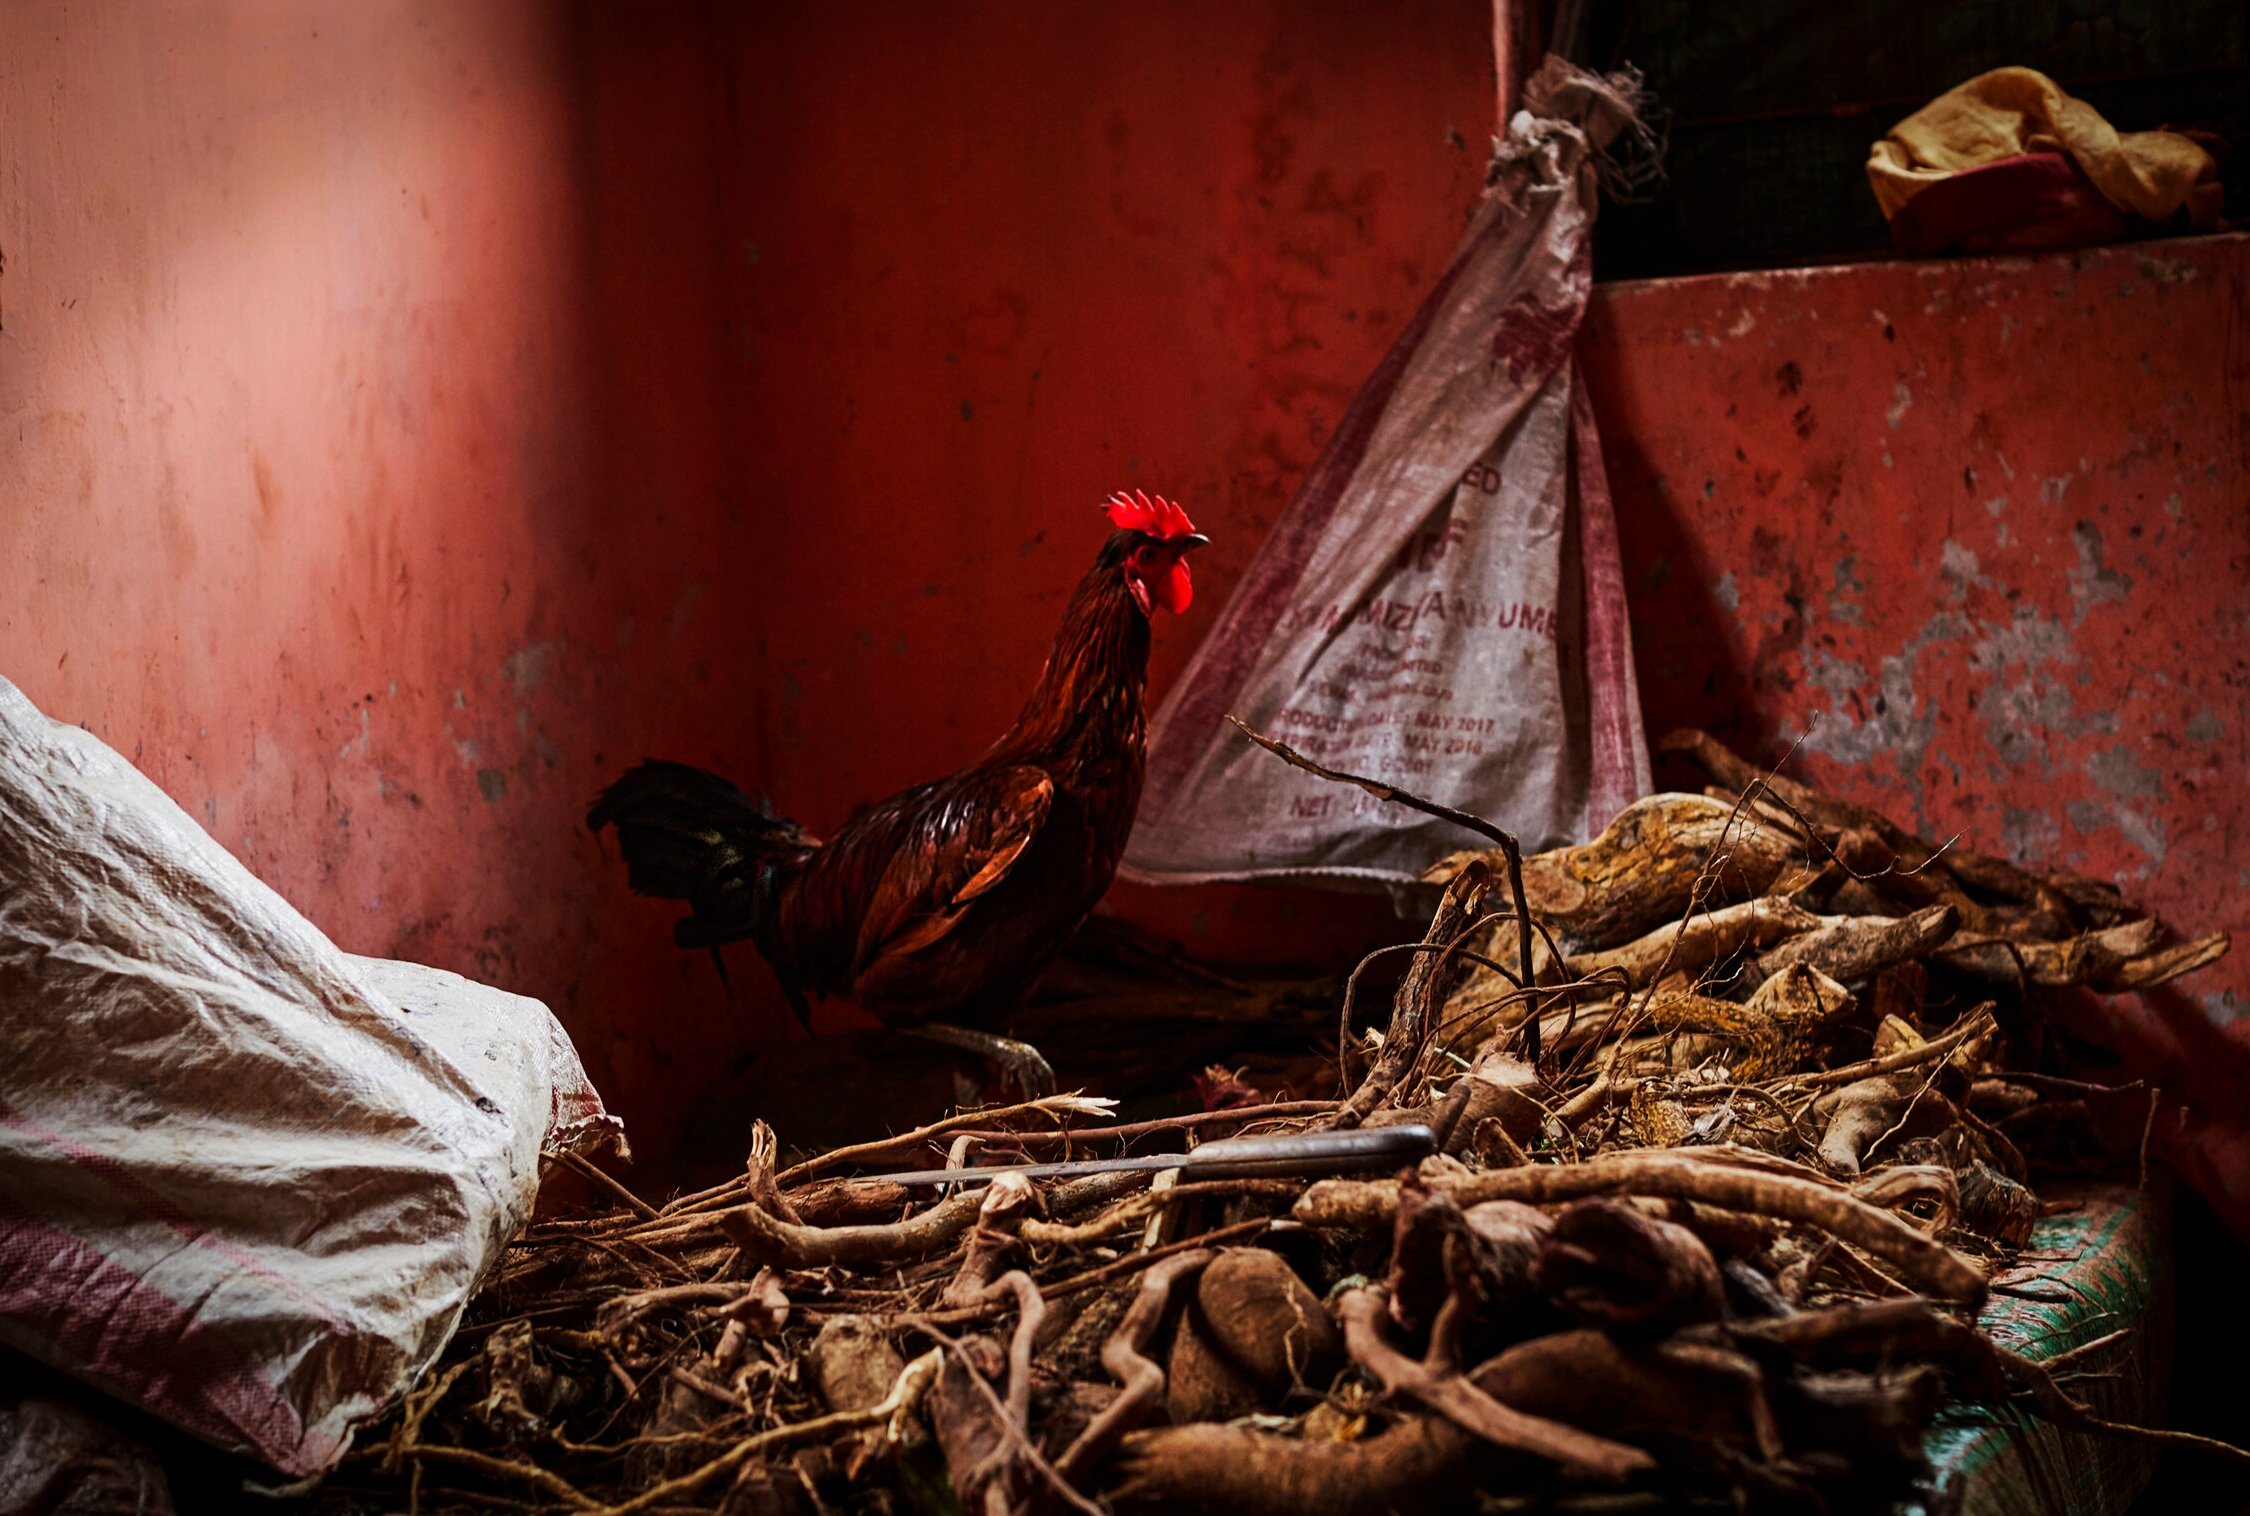   A rooster walks amidst roots used in traditional healing at Mwanahija Mzee’s clinic in Zanzibar City, Tanzania 